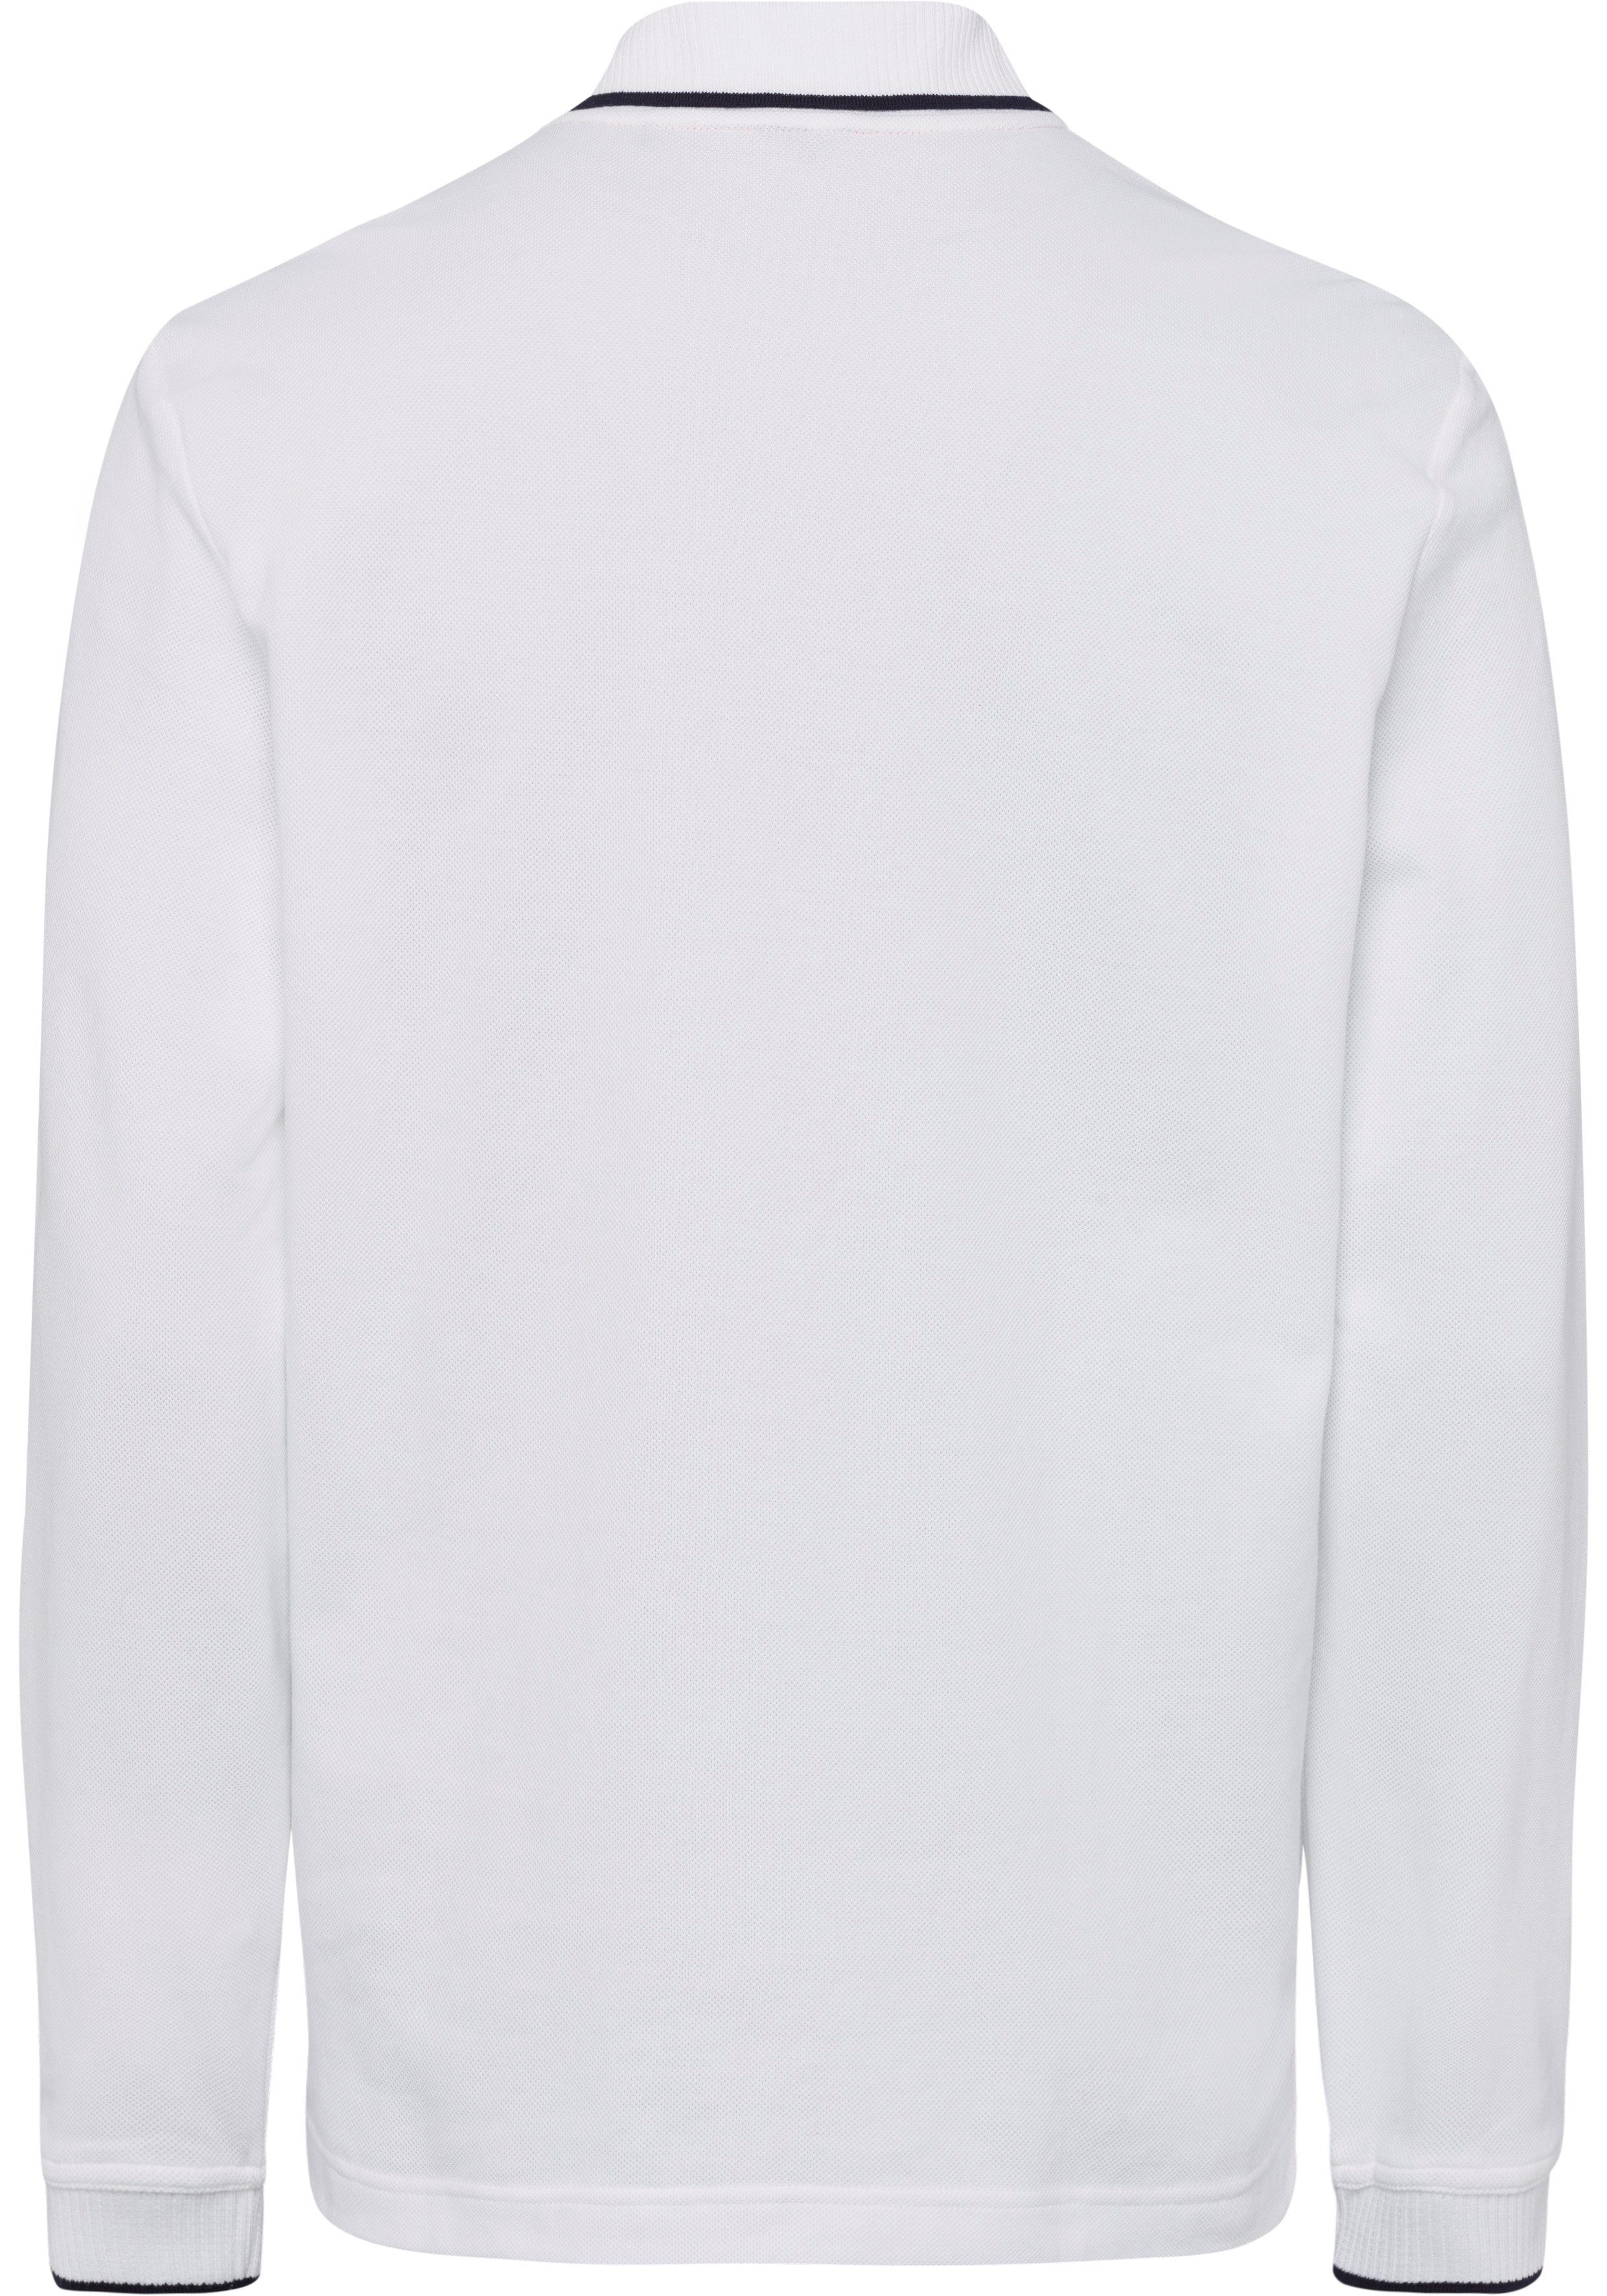 Pefelt BOSS Poloshirt Kontrastkanten mit ORANGE White